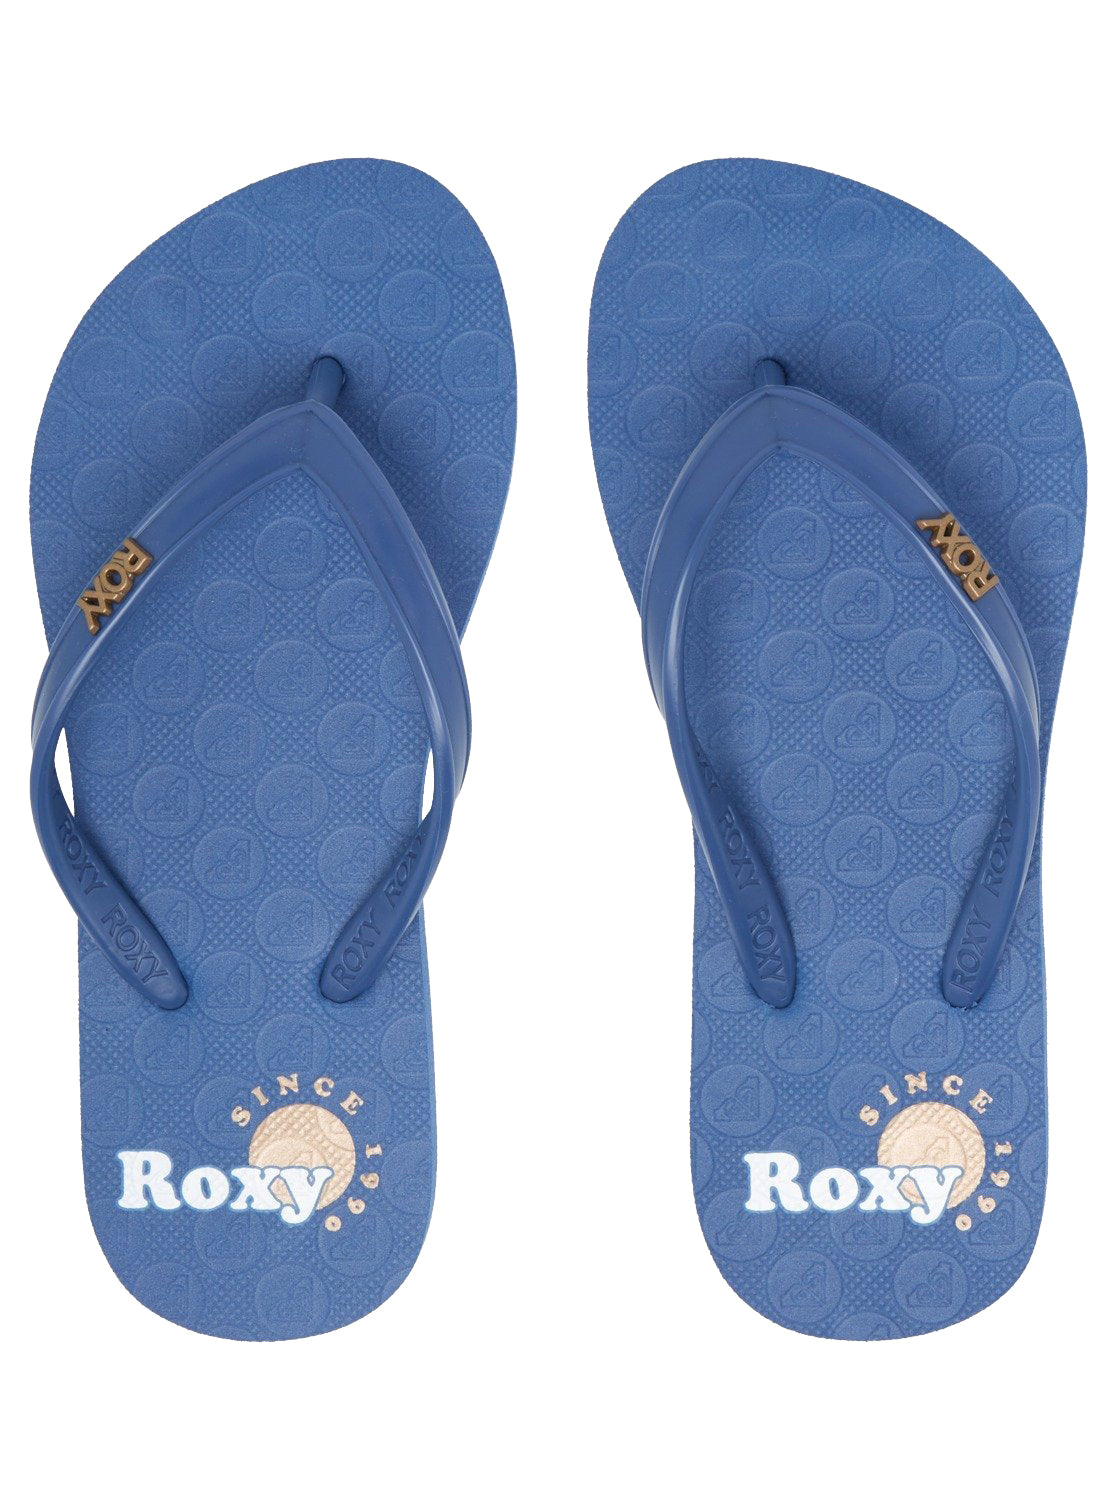 Roxy Viva Stamp 2 Girls Sandal BJL-Baja Blue 13 C